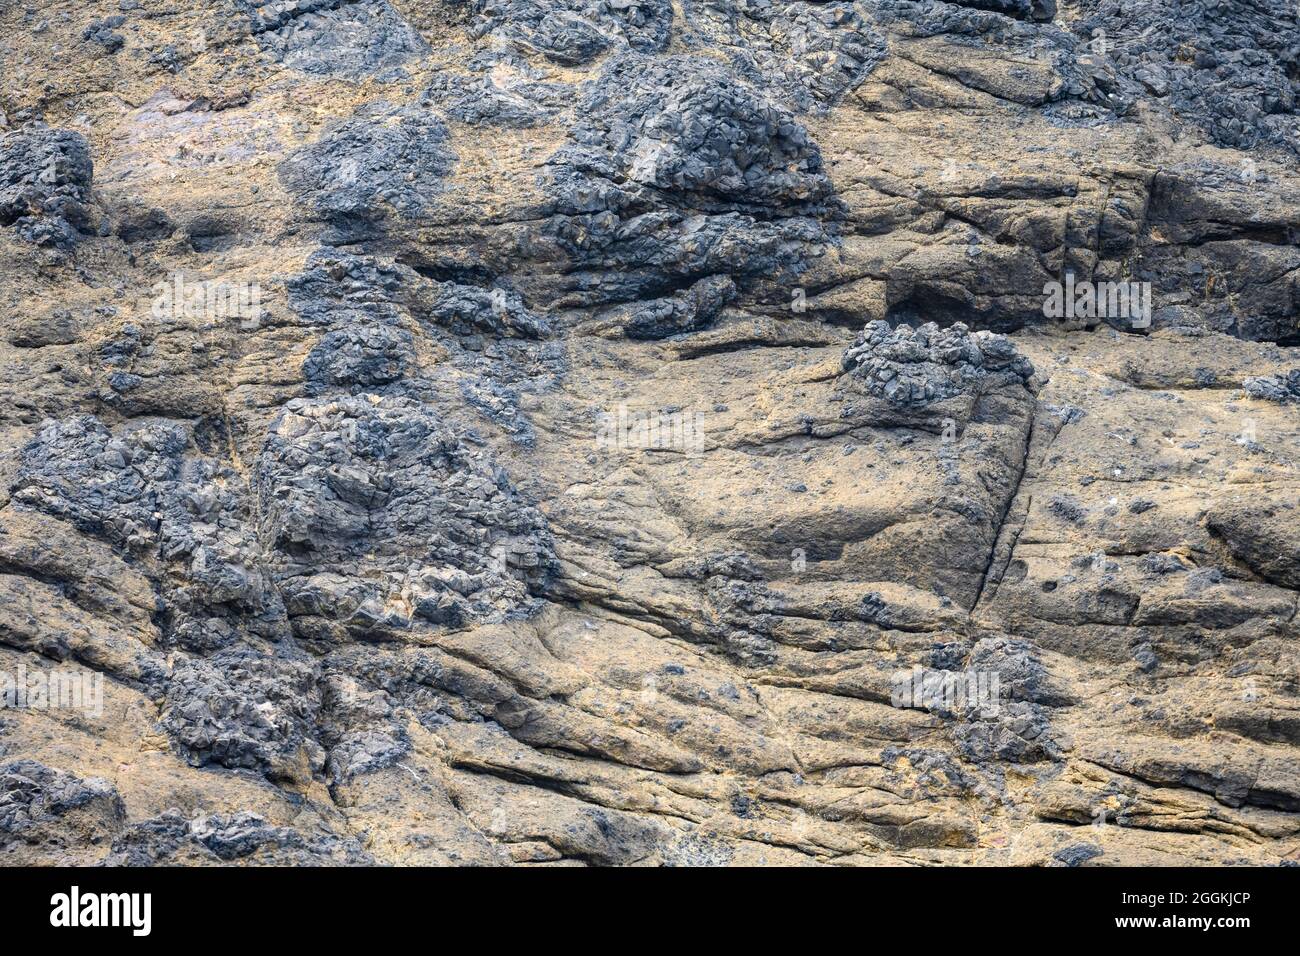 Große Felsbrocken aus vulkanischem Gestein, gemischt mit vulkanischer Asche. Tillamook, Oregon, USA. Stockfoto